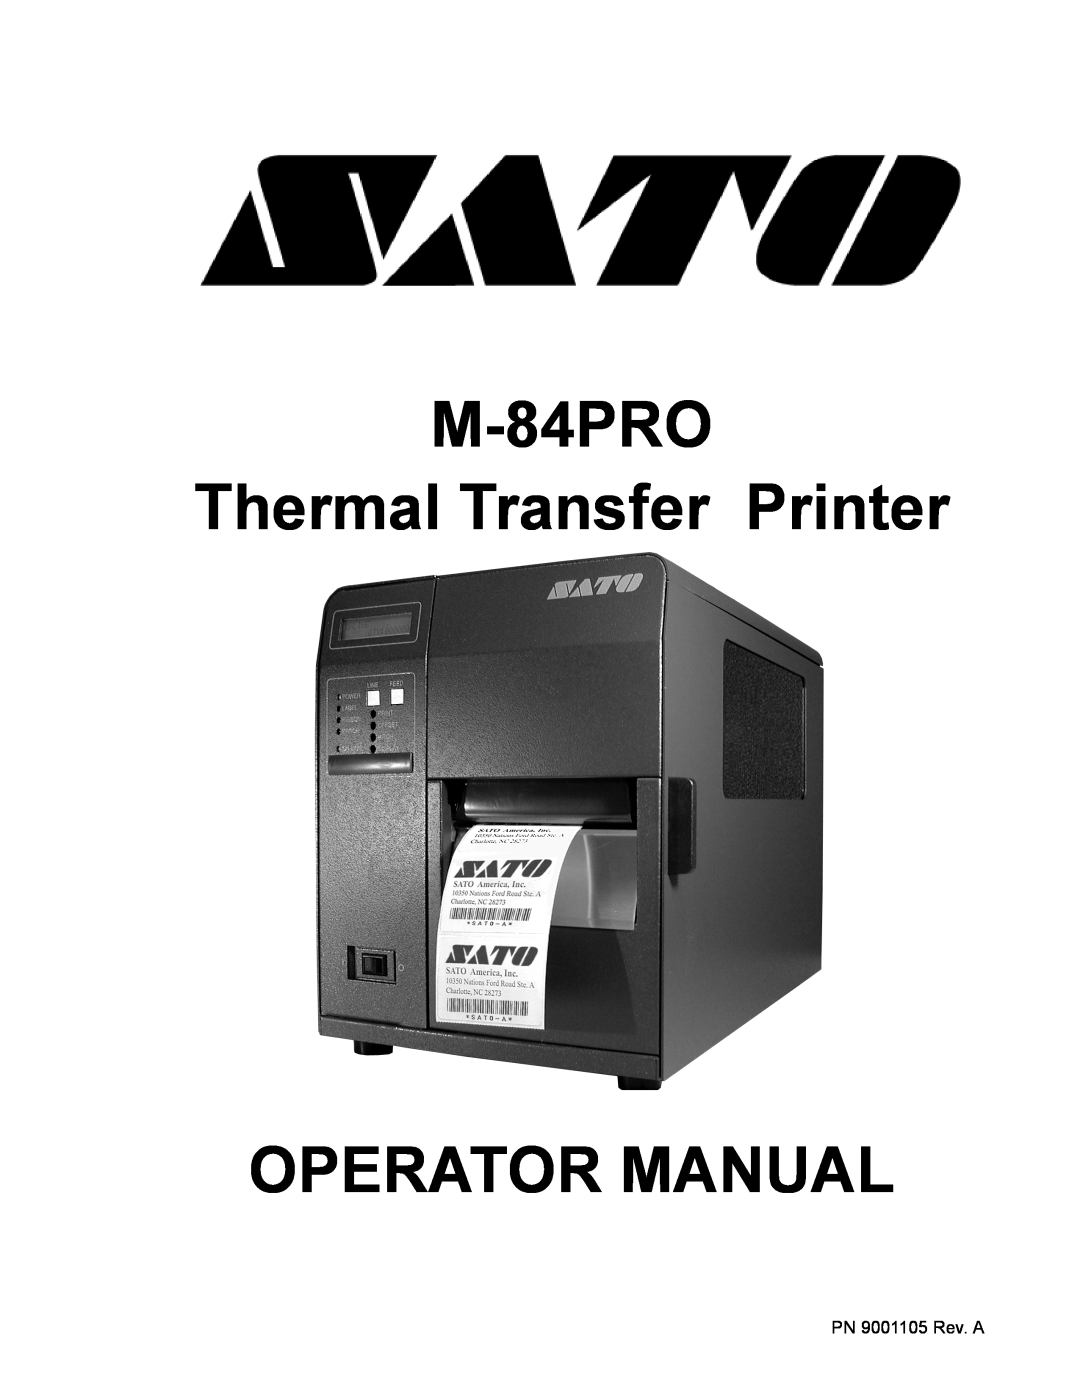 SATO manual M-84PRO Thermal Transfer Printer OPERATOR MANUAL, PN 9001105 Rev. A 